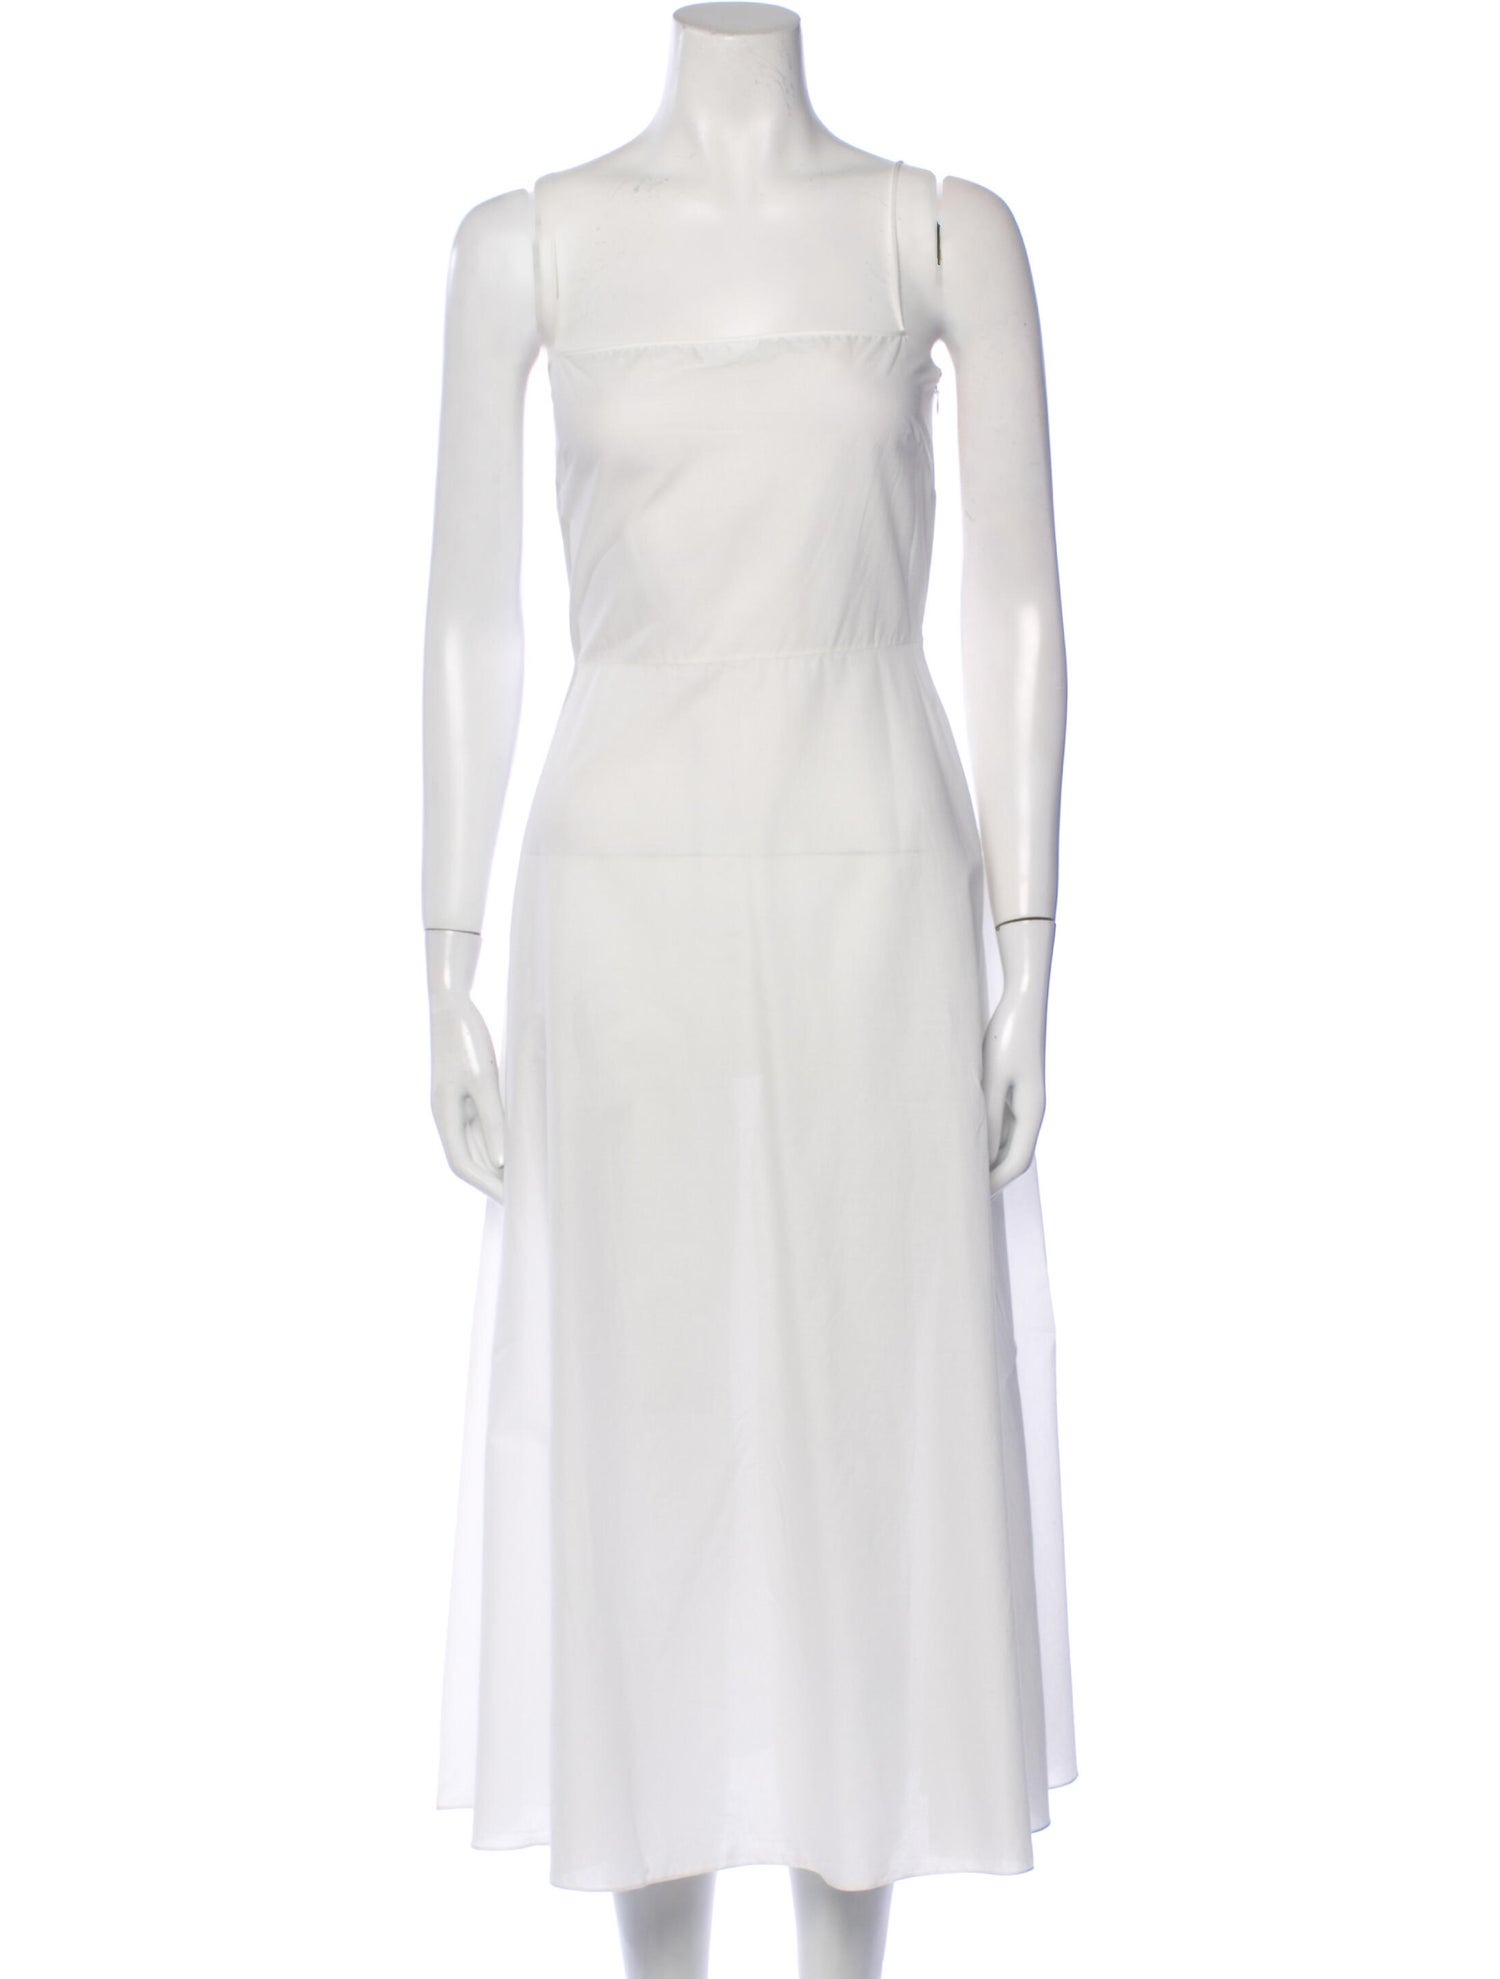 CHRISTIAN DIOR Square Neckline Midi Length Dress Size: XS